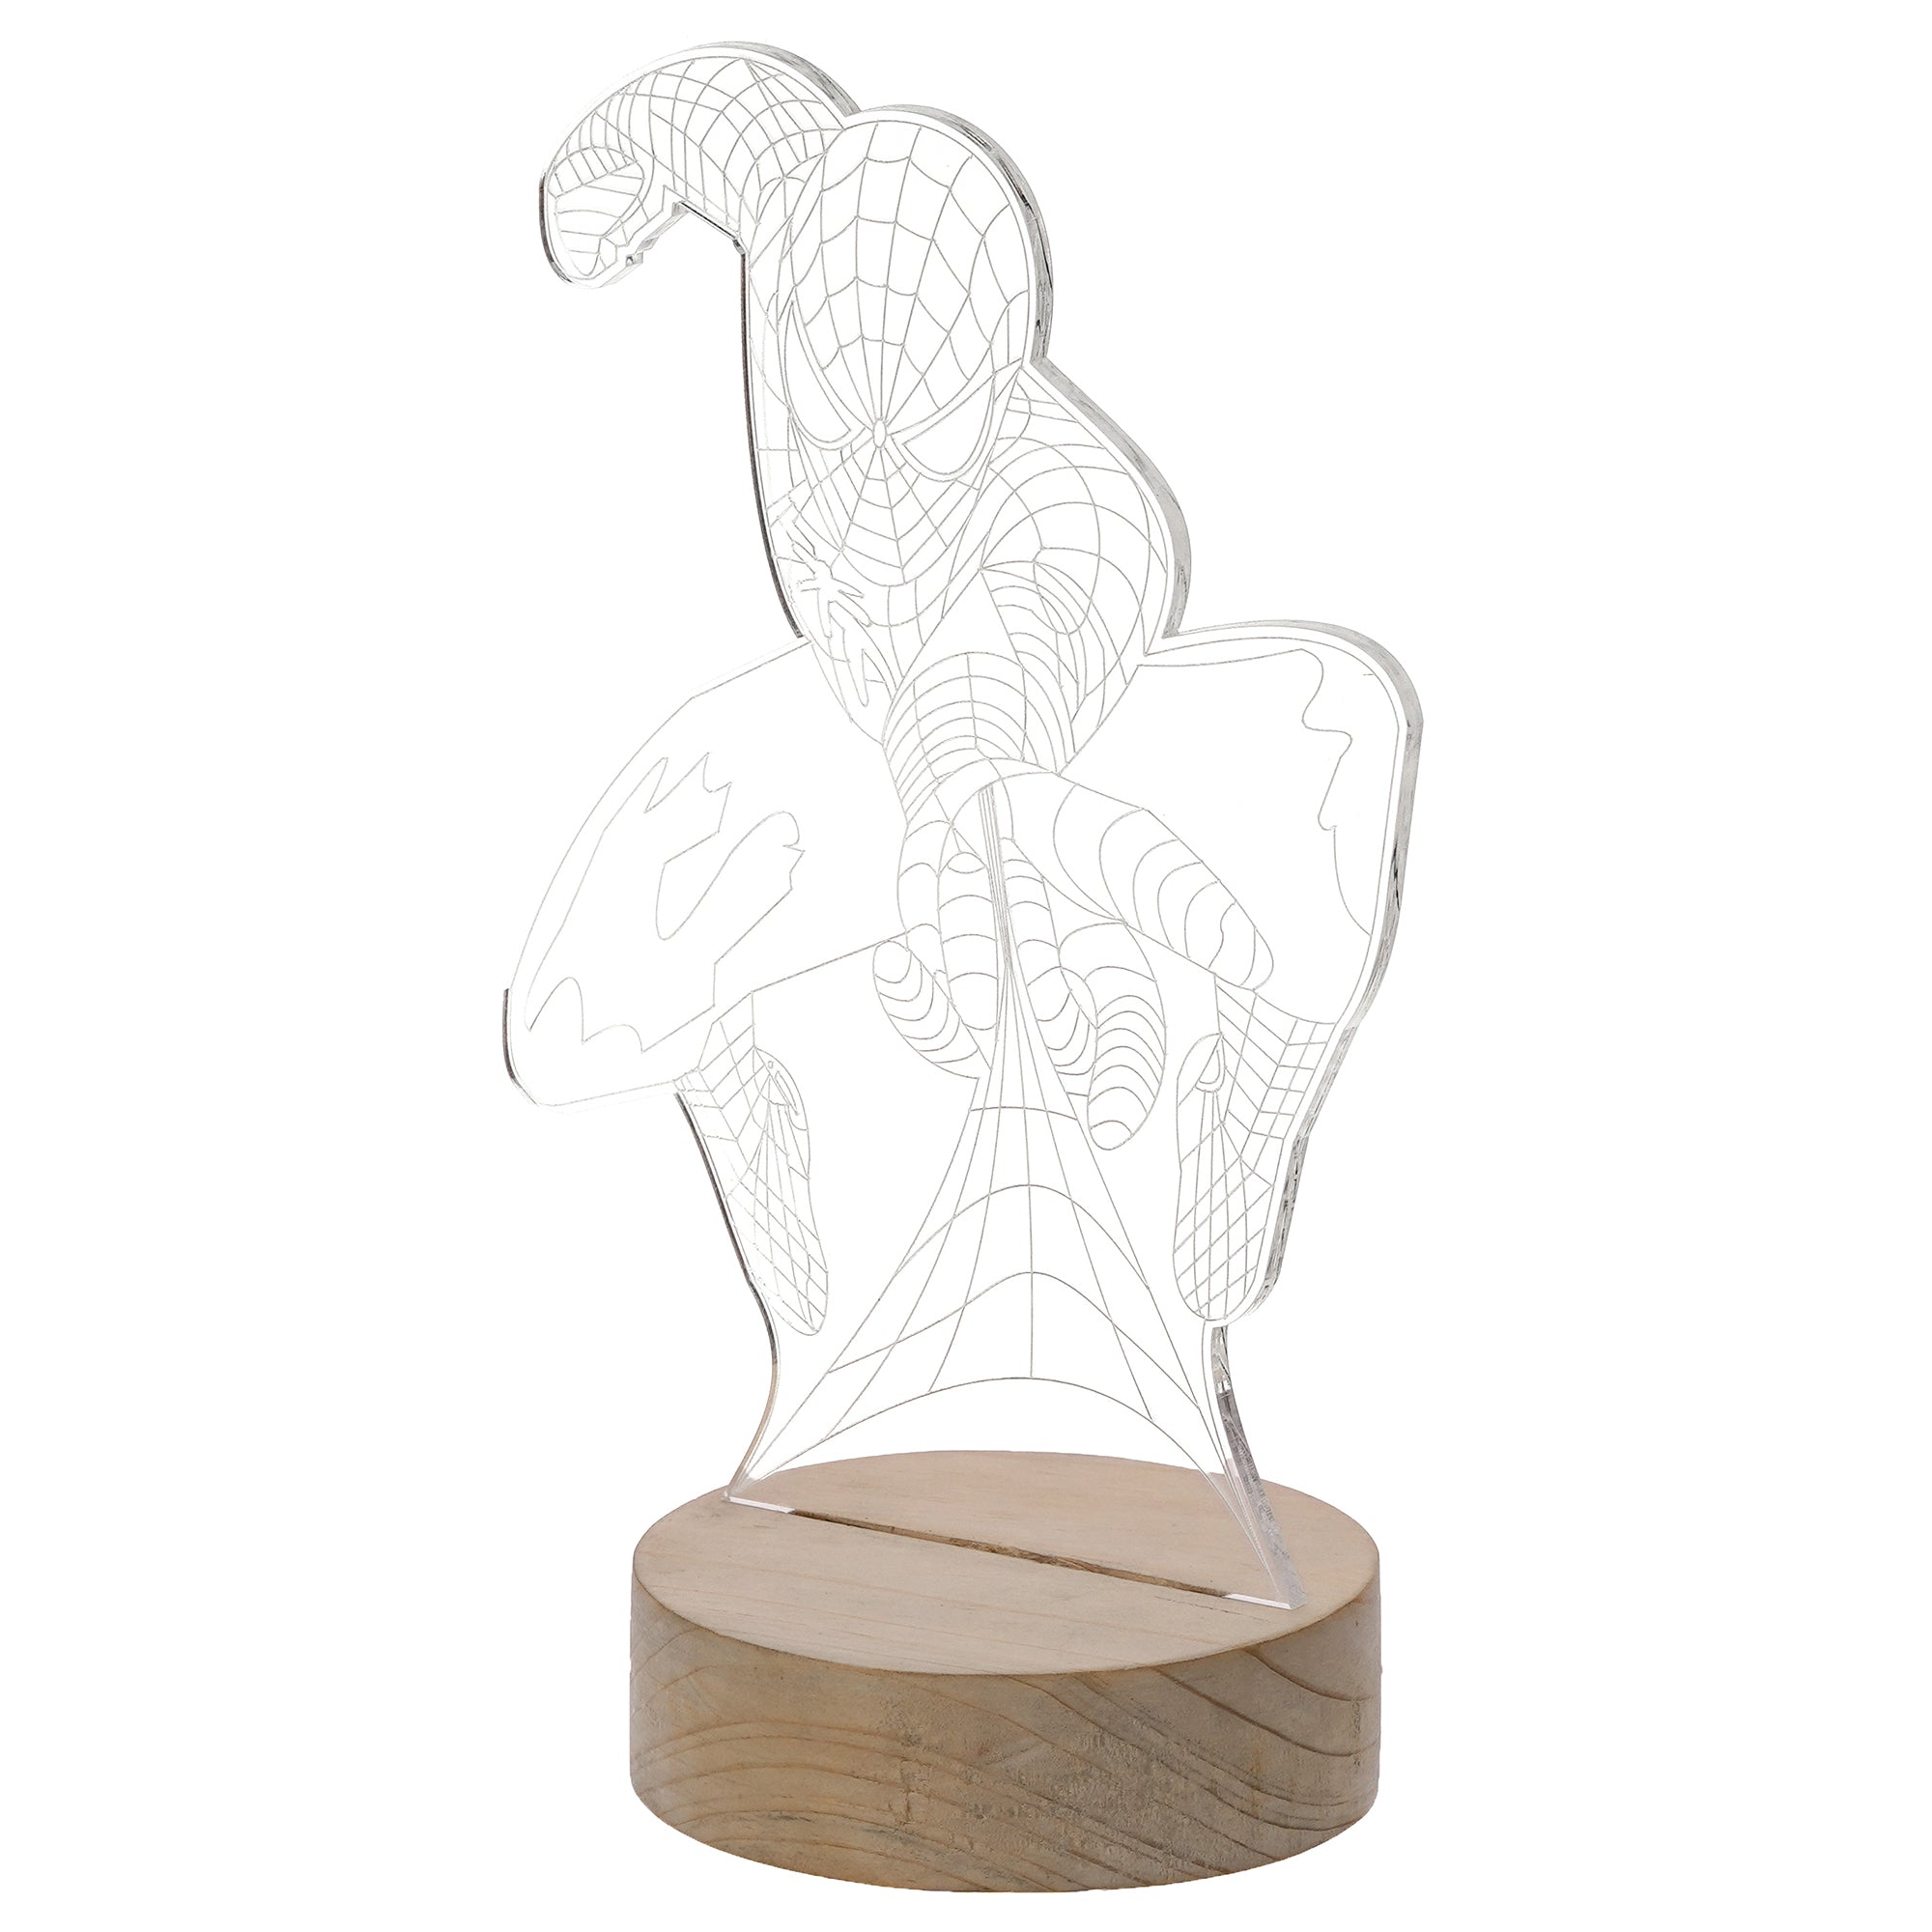 Spiderman Design Carved on Acrylic & Wood Base Night Lamp 5